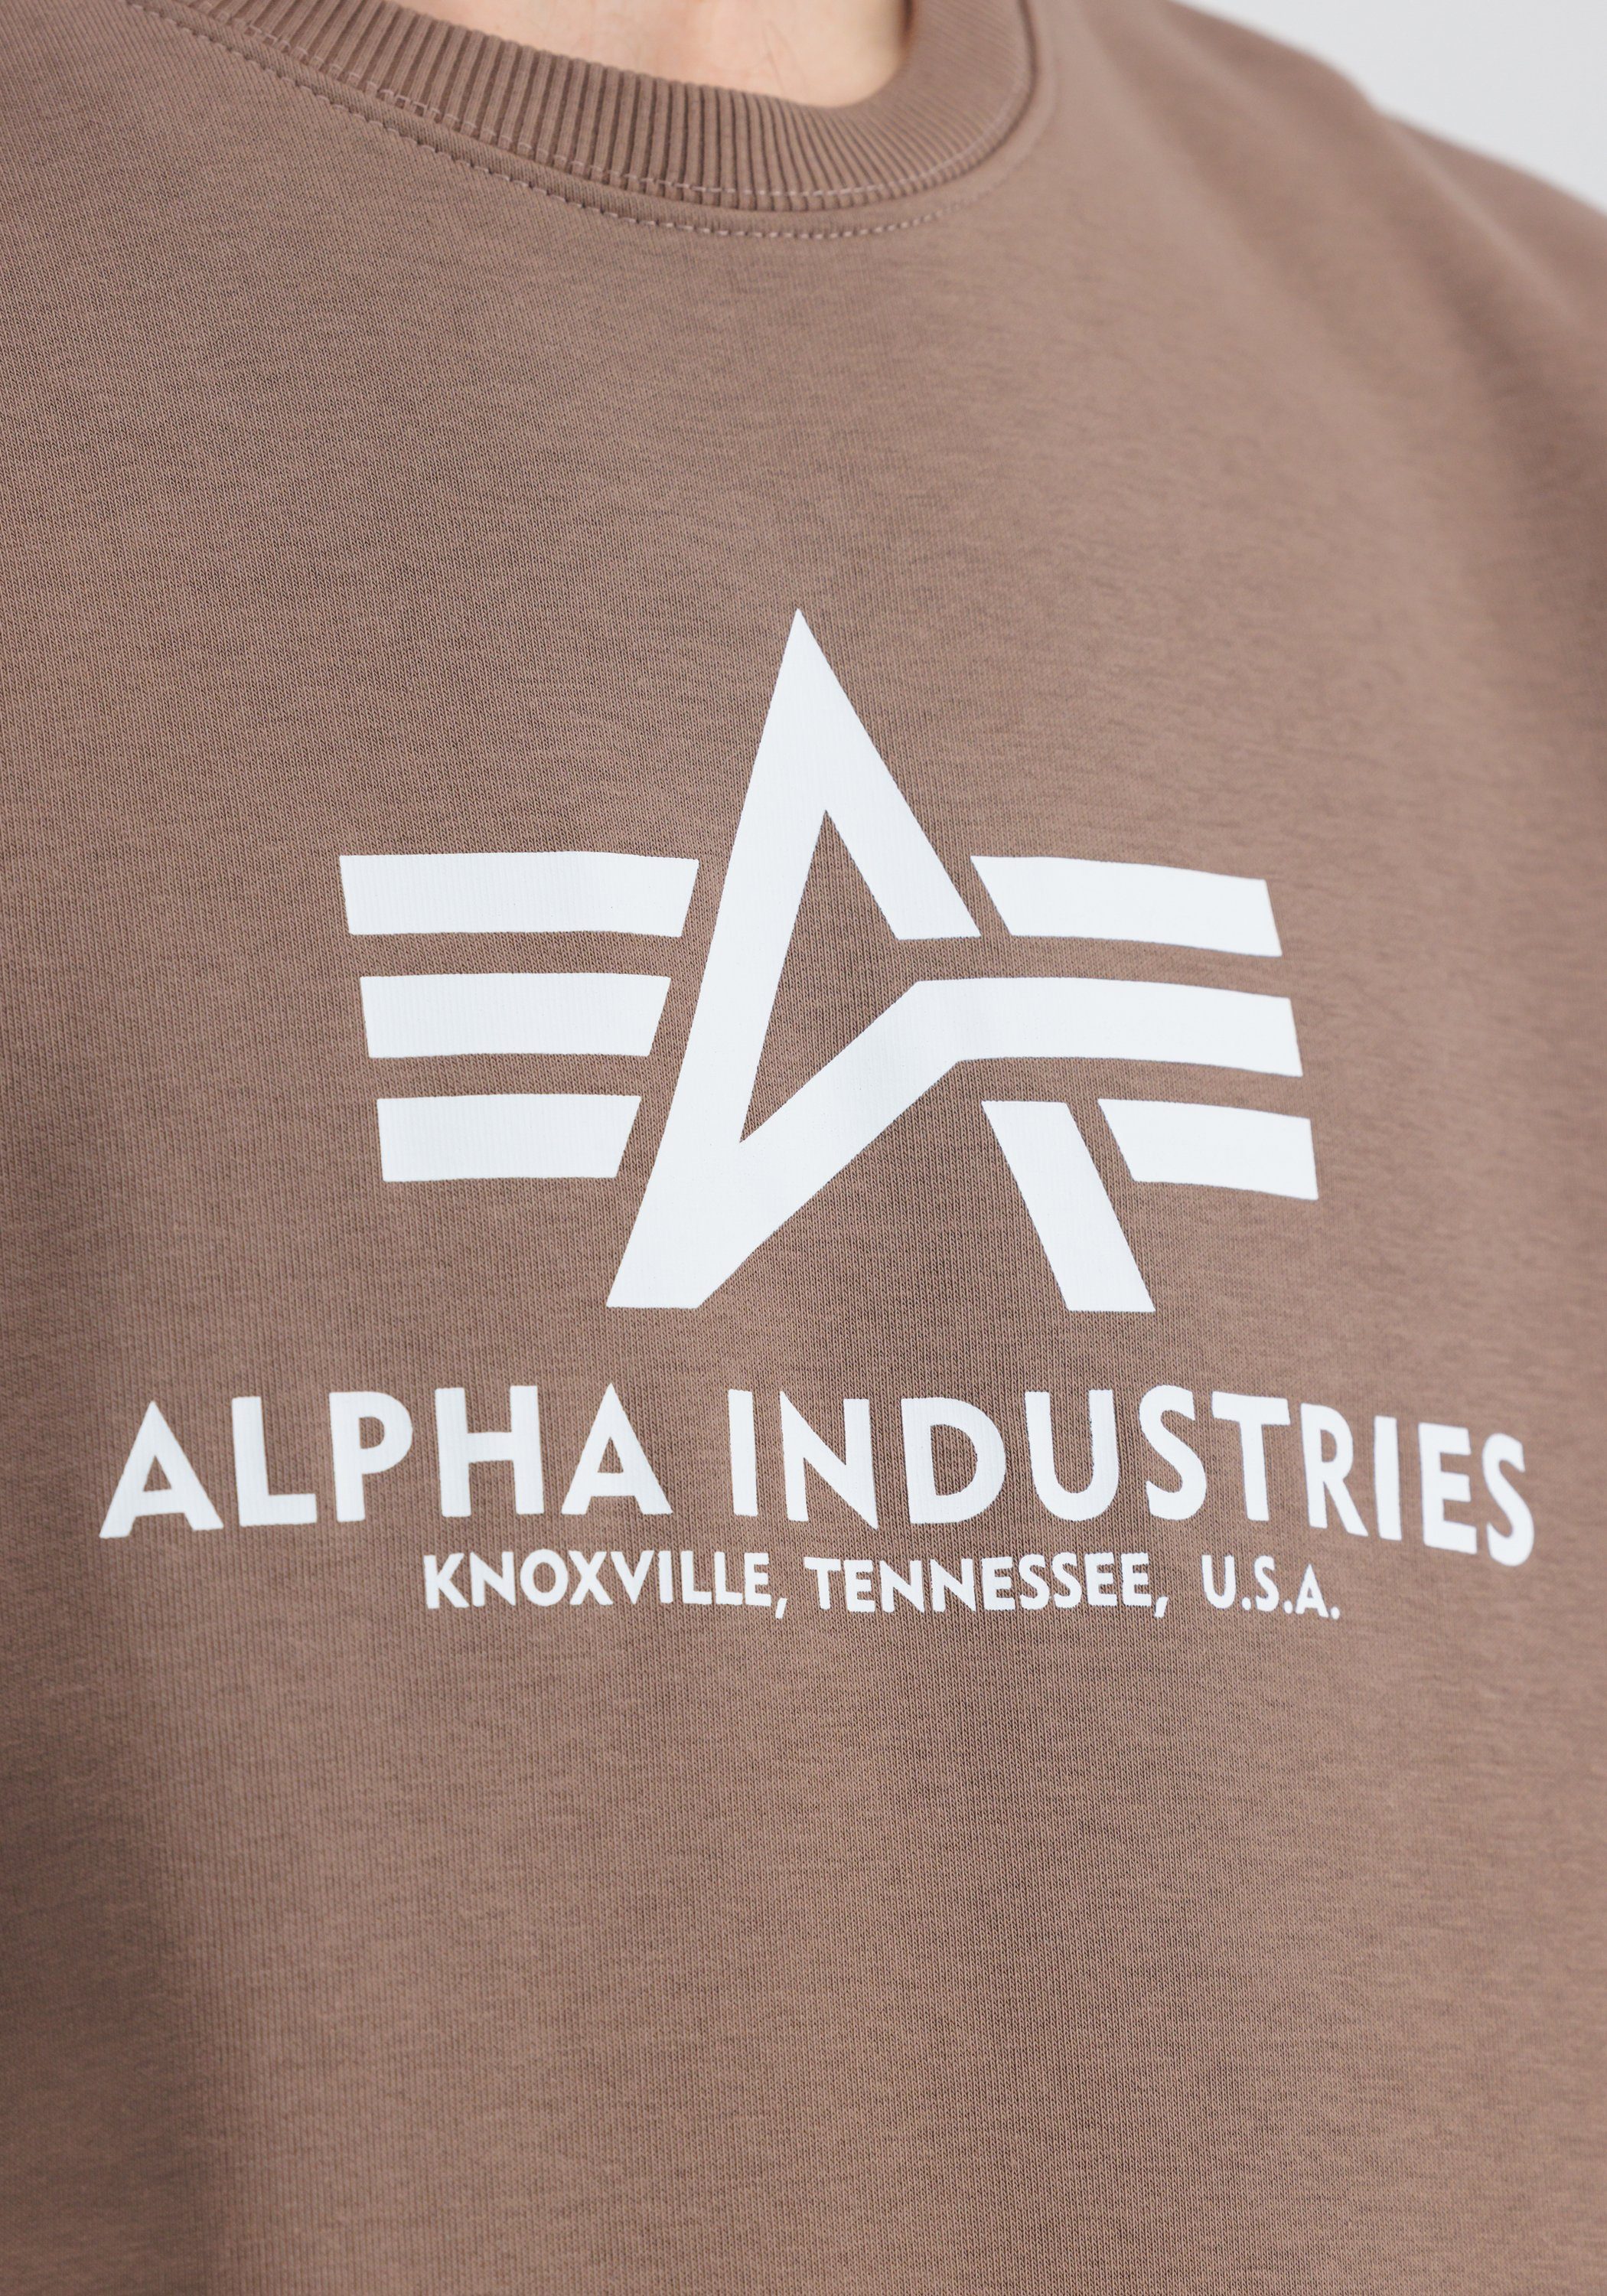 Sweatshirts Basic Sweater taupe Sweater Industries Men - Industries Alpha Alpha